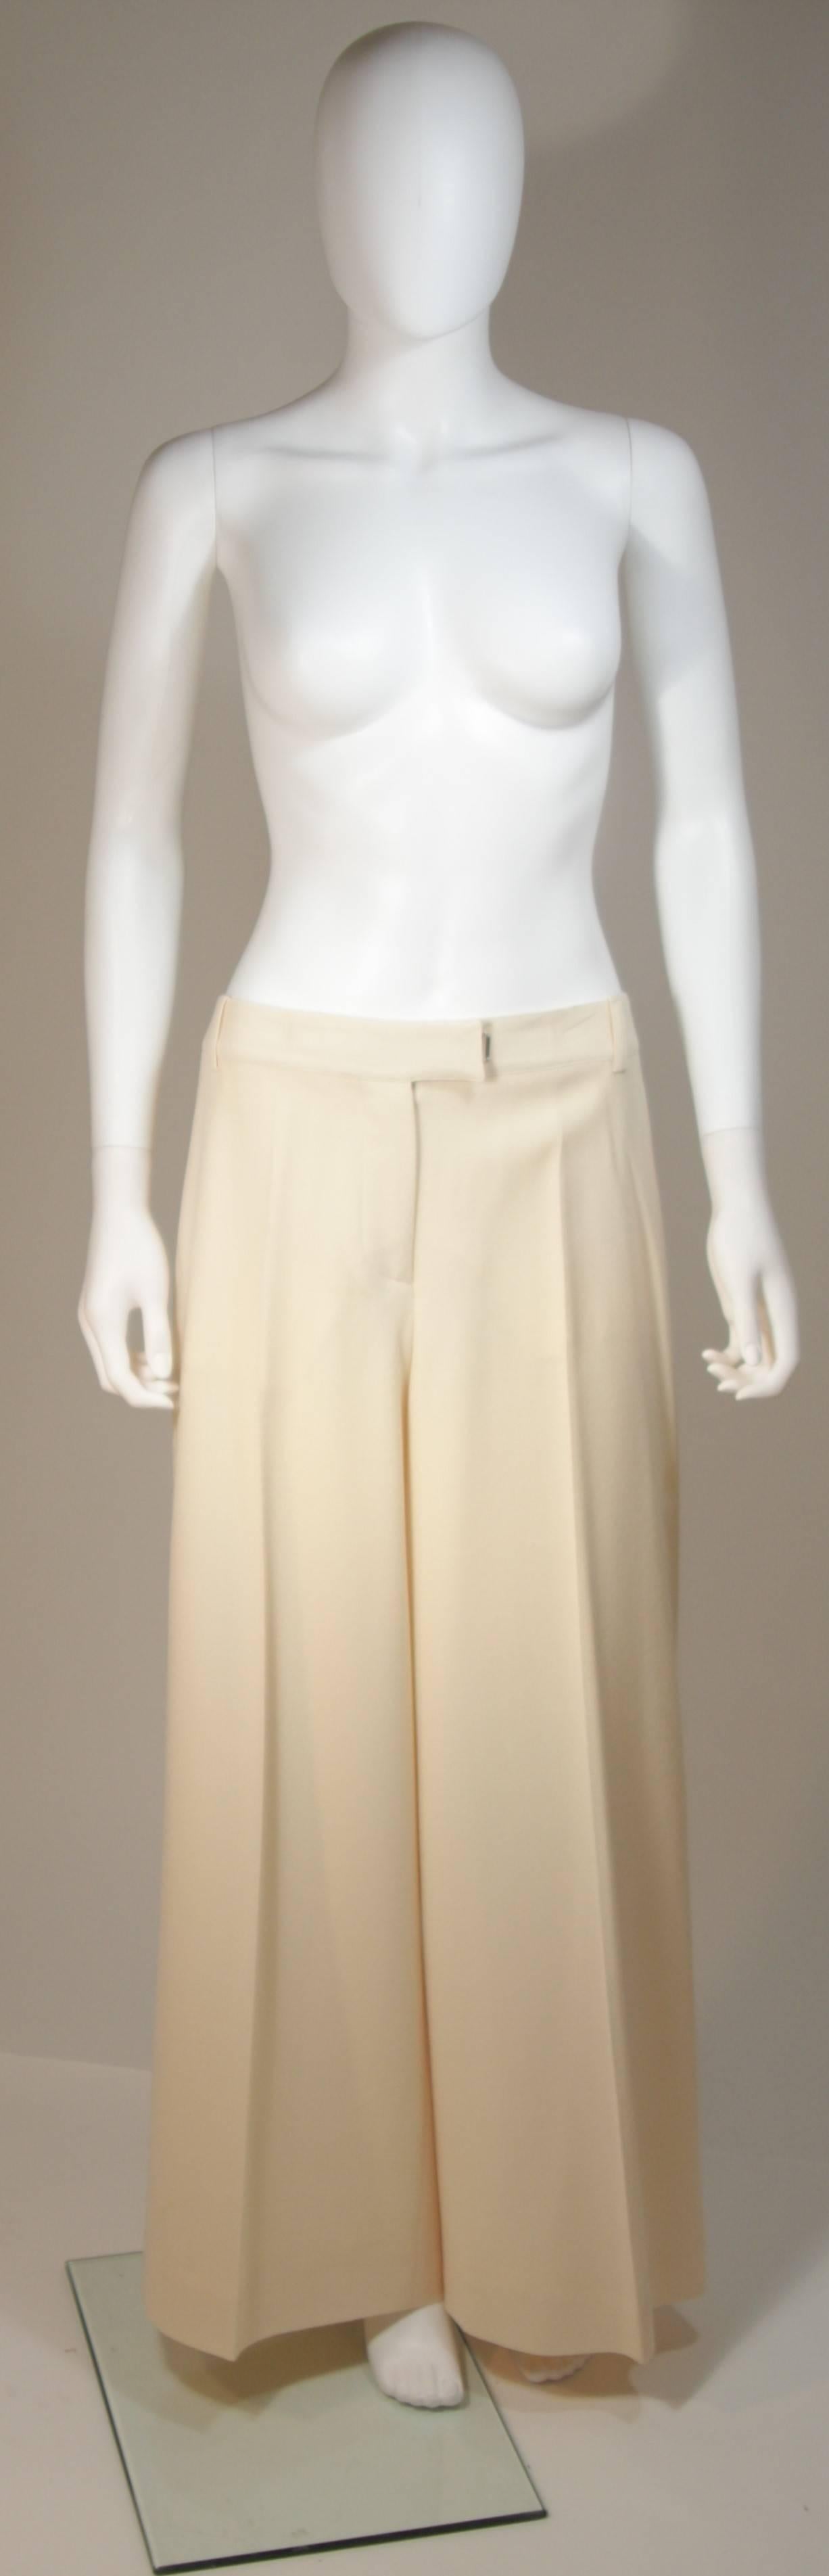 JOHN GALLIANO Ivory Silk Pant Suit with Metallic Applique Size 44 42 4